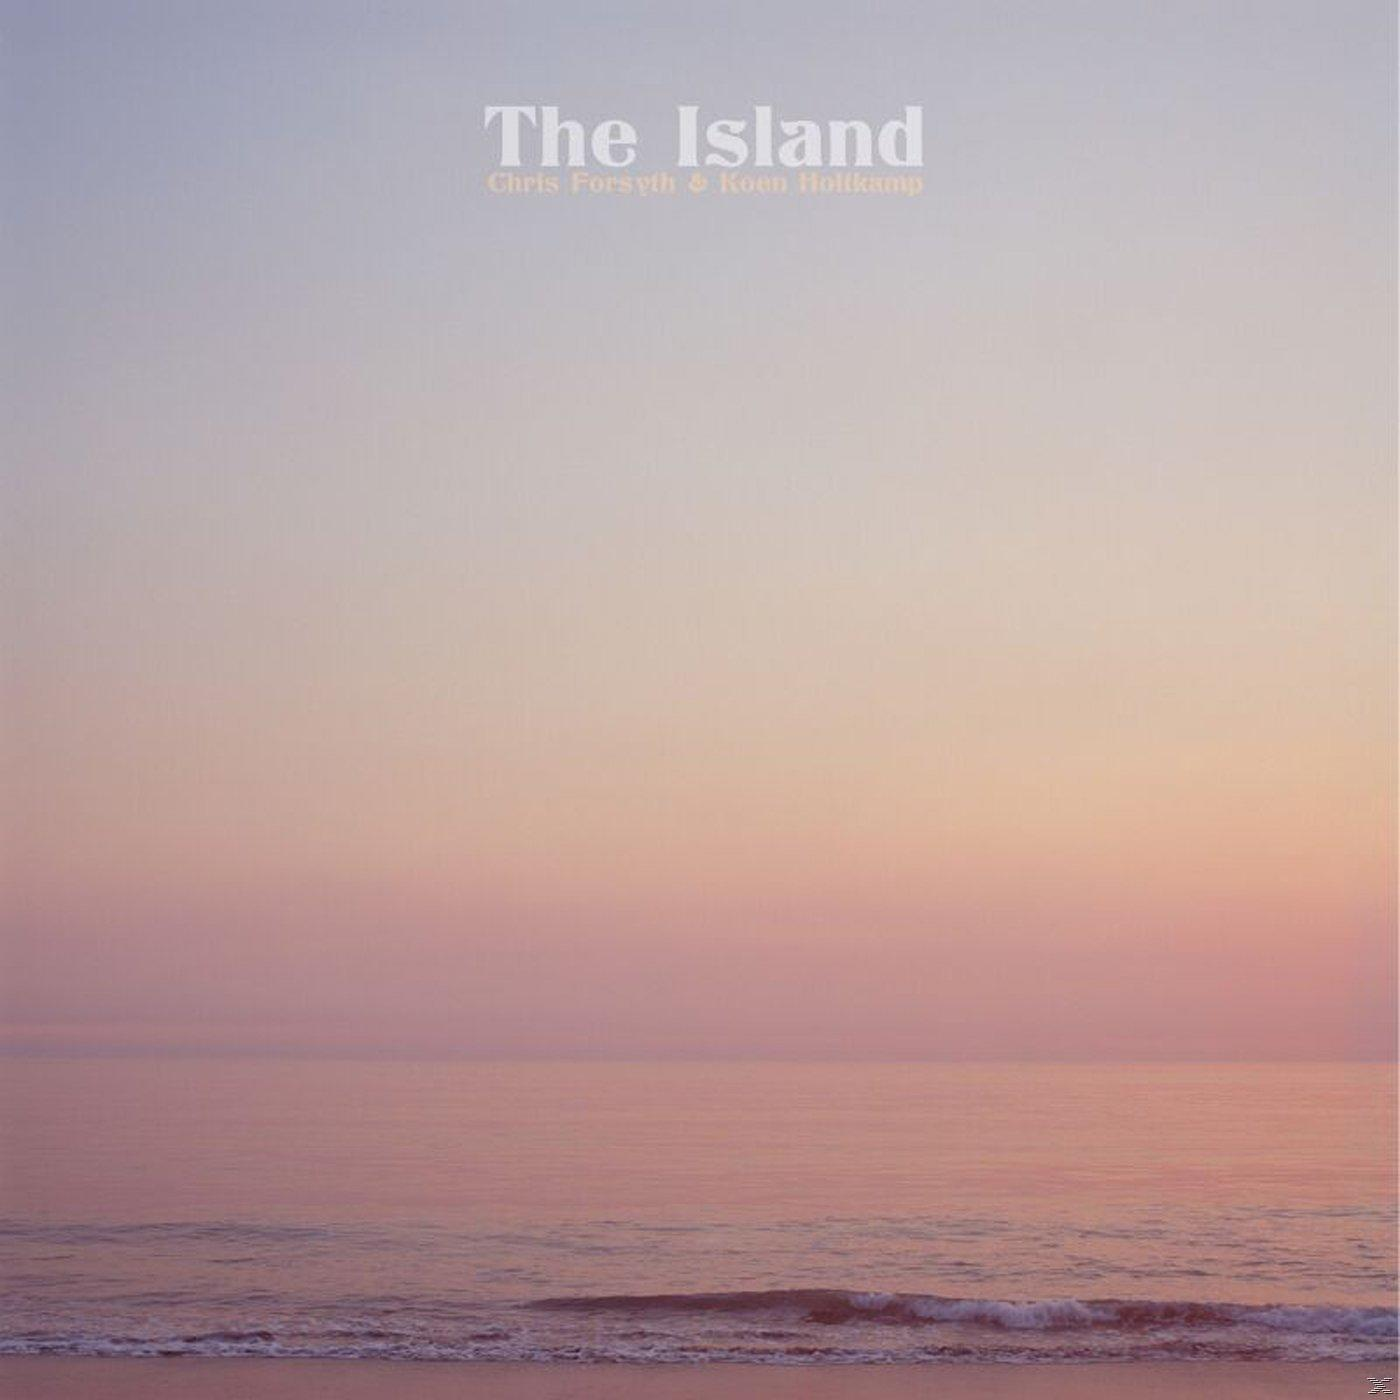 Chris -& Koen Holtkamp- Forsyth Island (CD) - - The